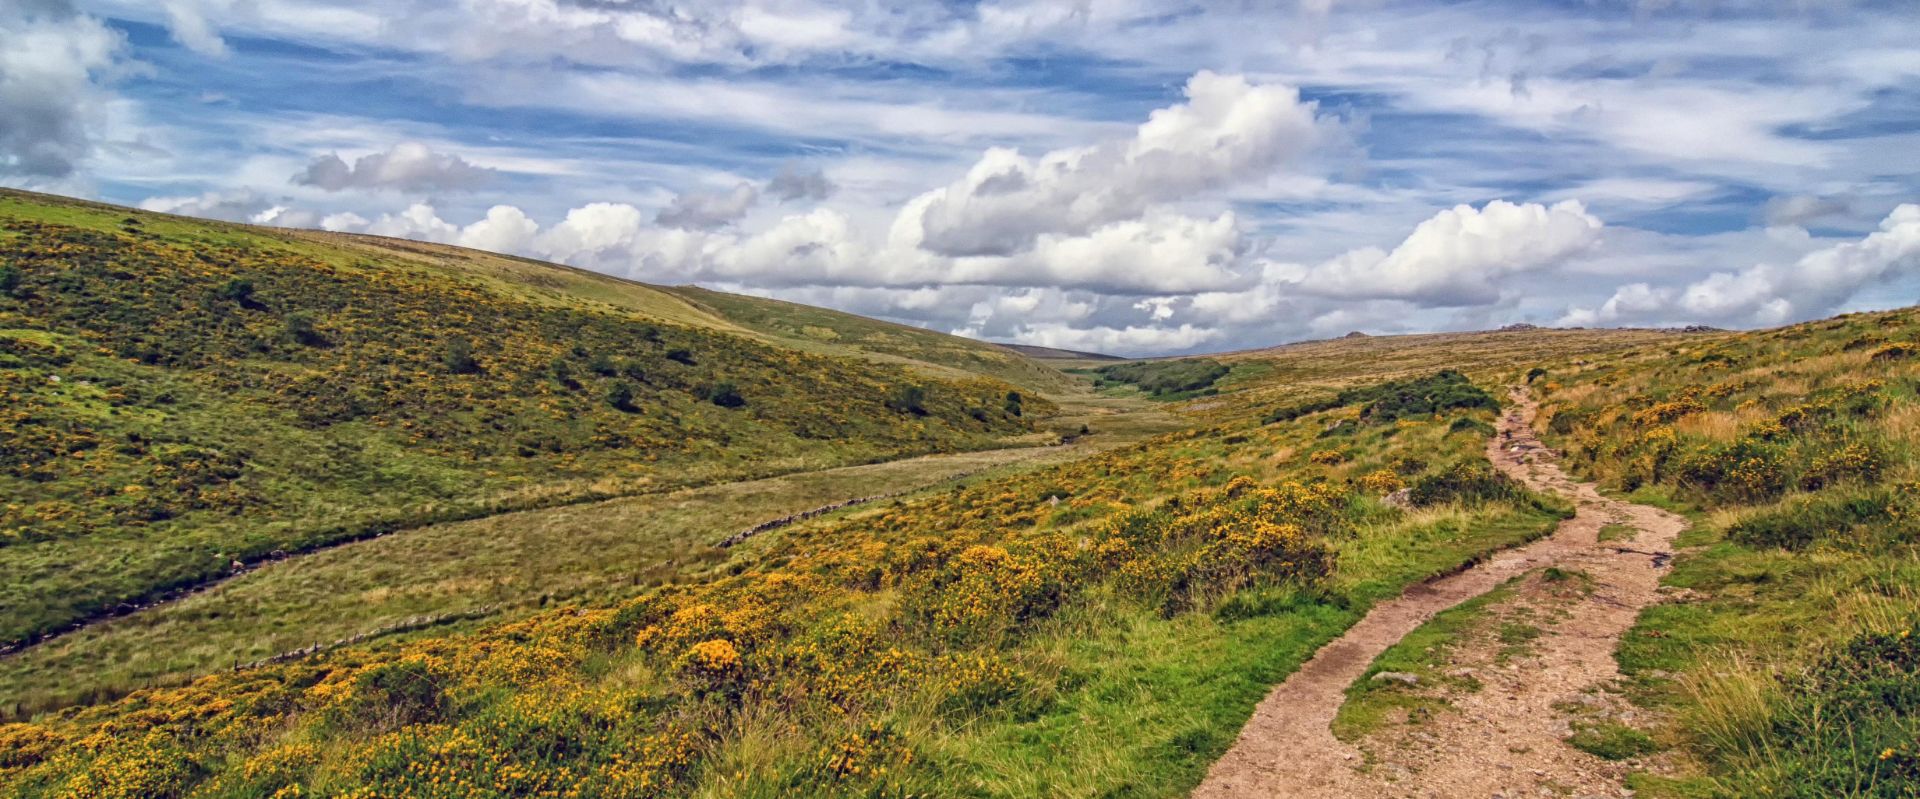 The walk to Wistman's Wood on Dartmoor